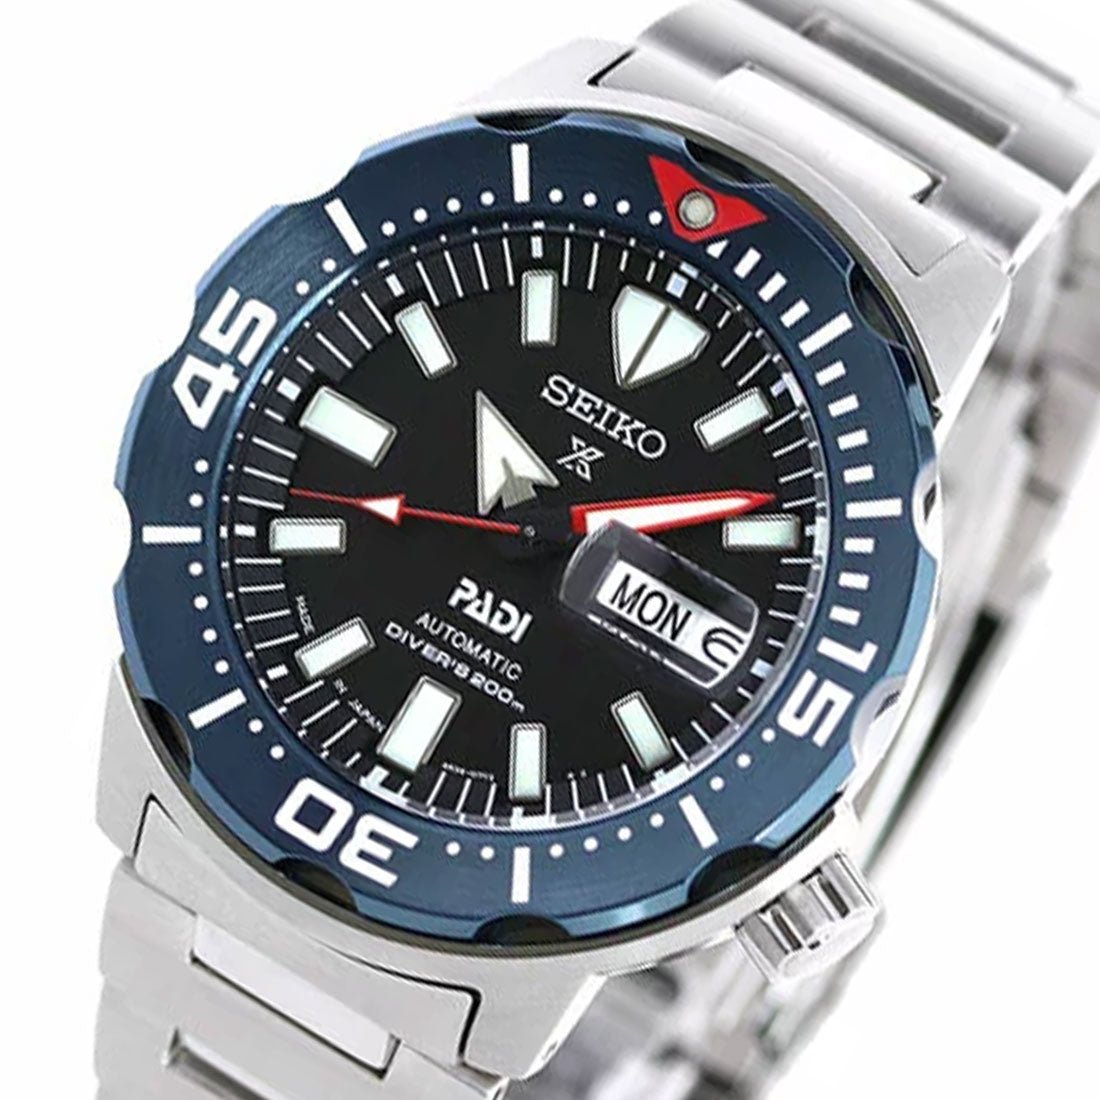 Seiko Prospex PADI Special Edition Diving JDM Watch SBDY057 -Seiko